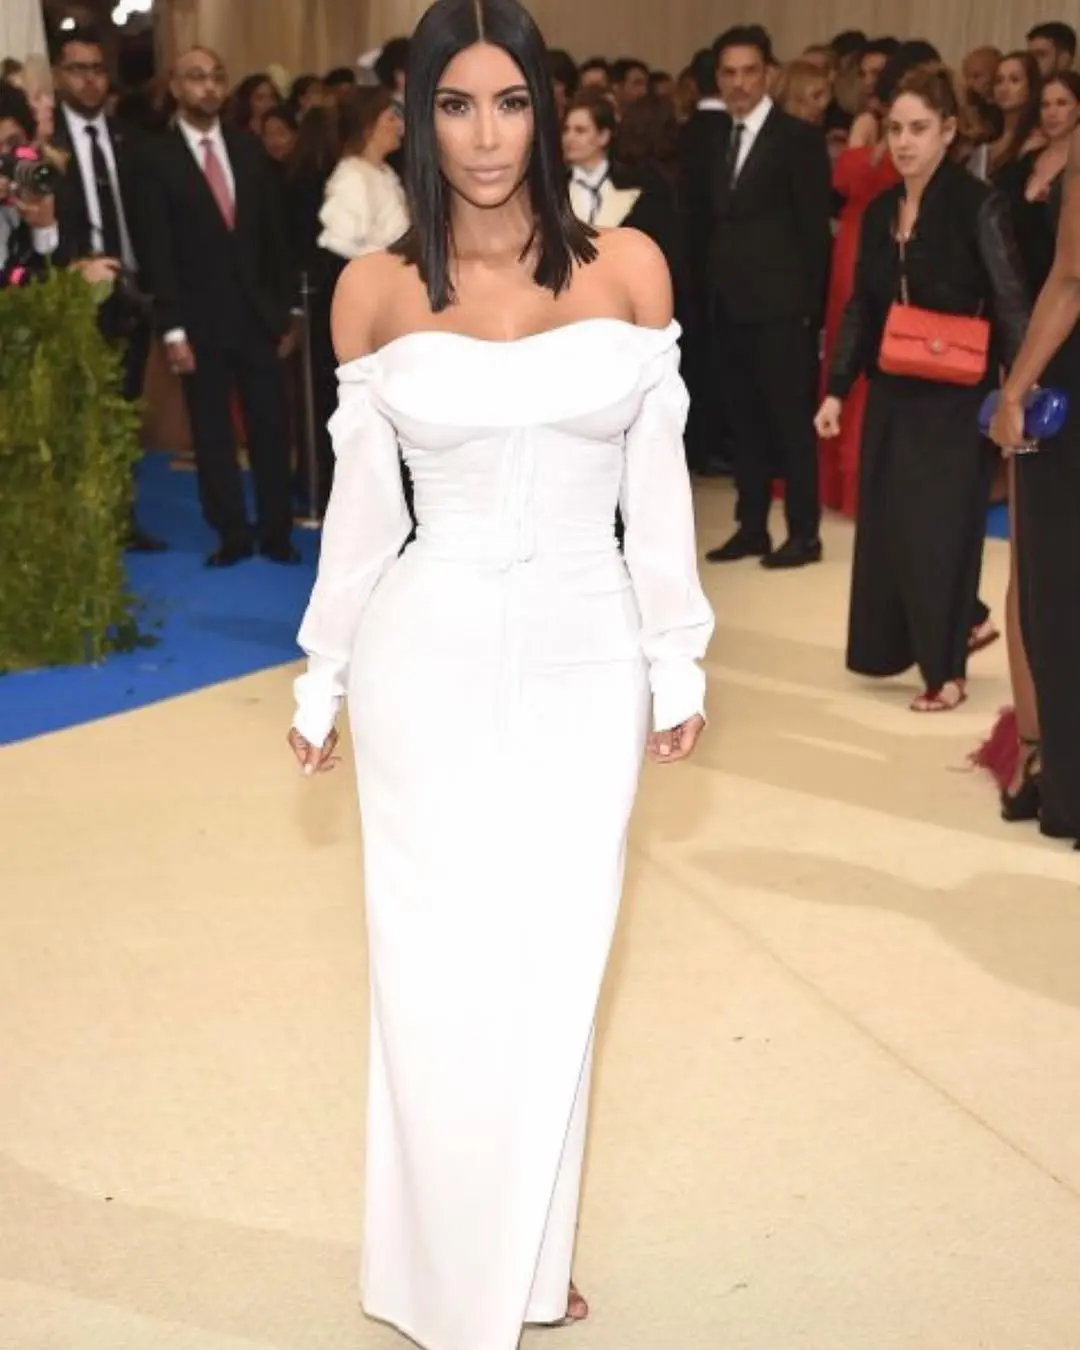 Kim Kadarshian memakai gaun saat menghadiri acara formal. (sumber foto: @kimkadarshian/instagram)